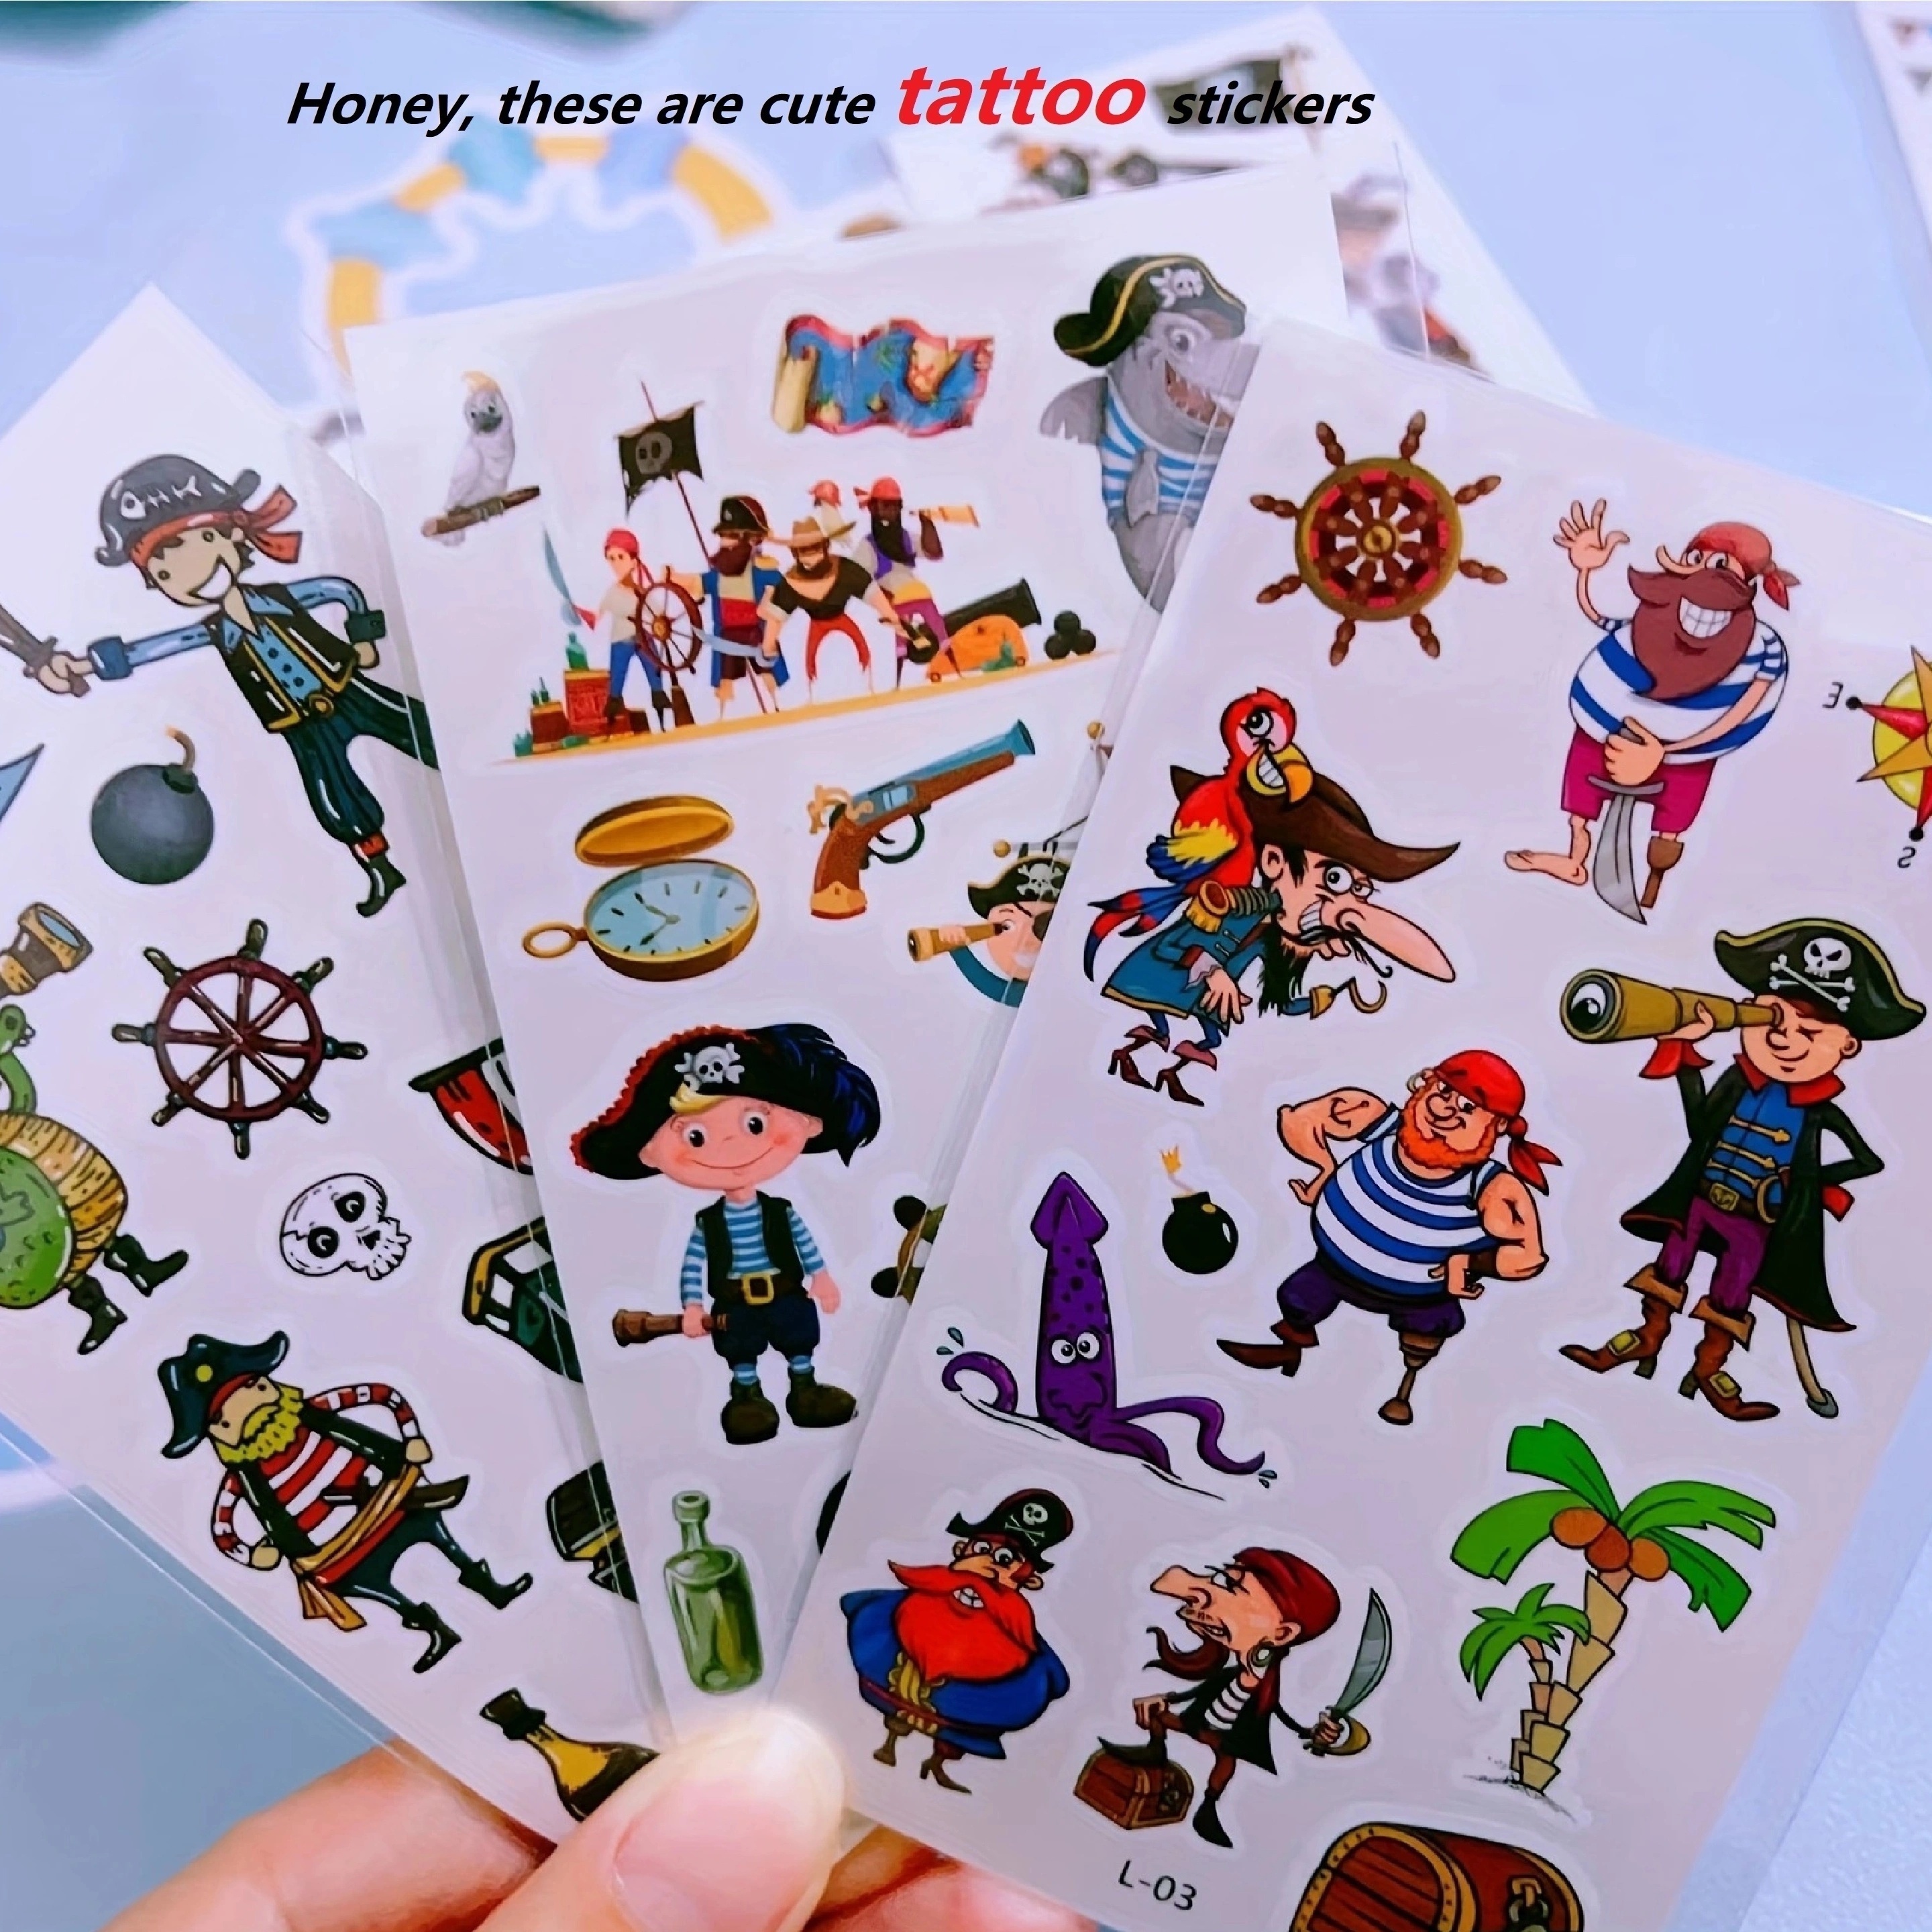 Pegatinas de tatuaje de unicornio de dibujos animados para niños,  transferencia de agua divertida, tatuajes falsos